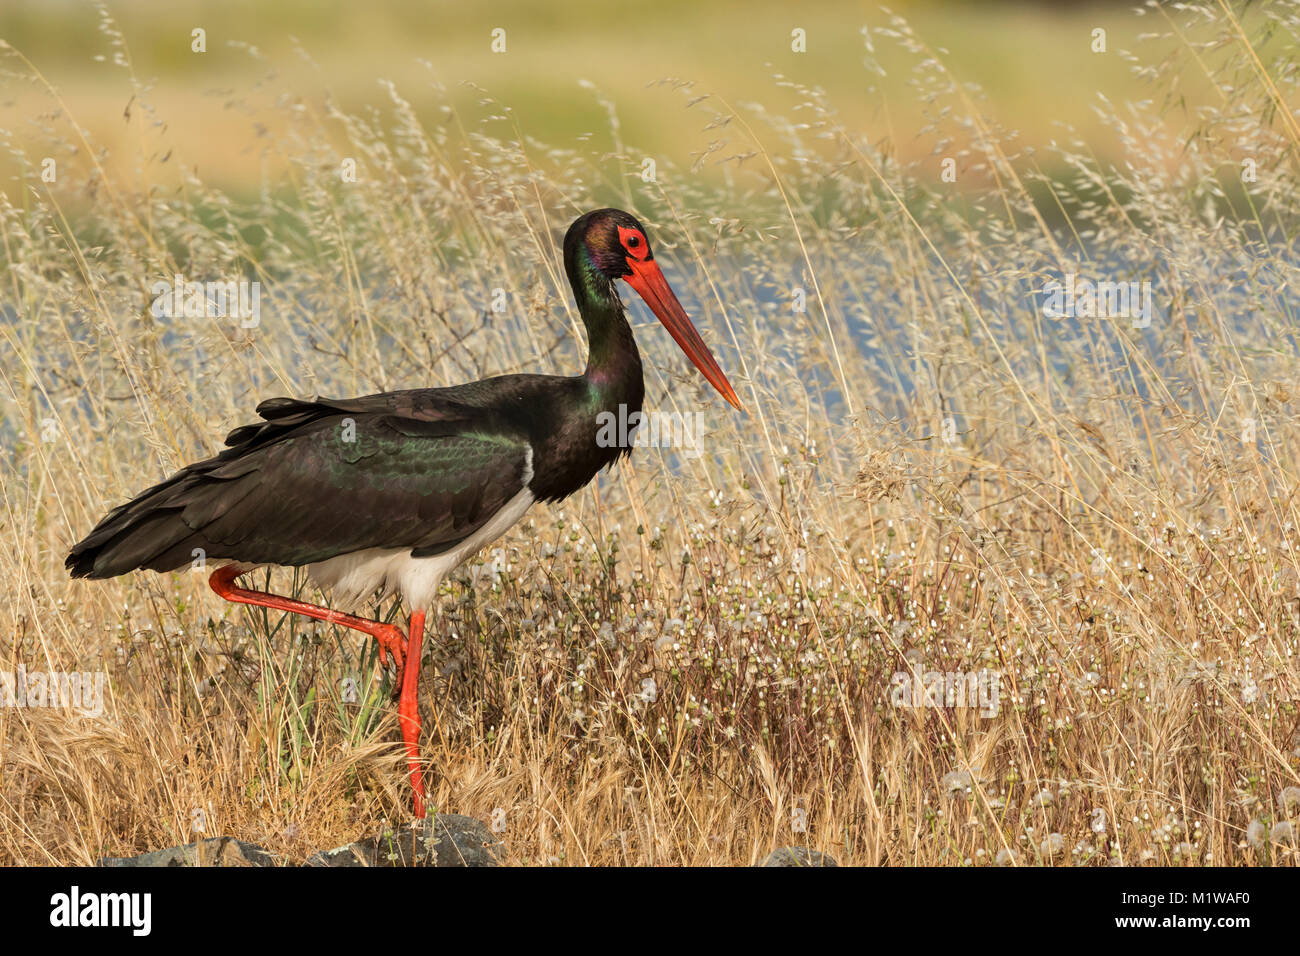 Adult Black Stork (Ciconia nigra) on the ground Stock Photo